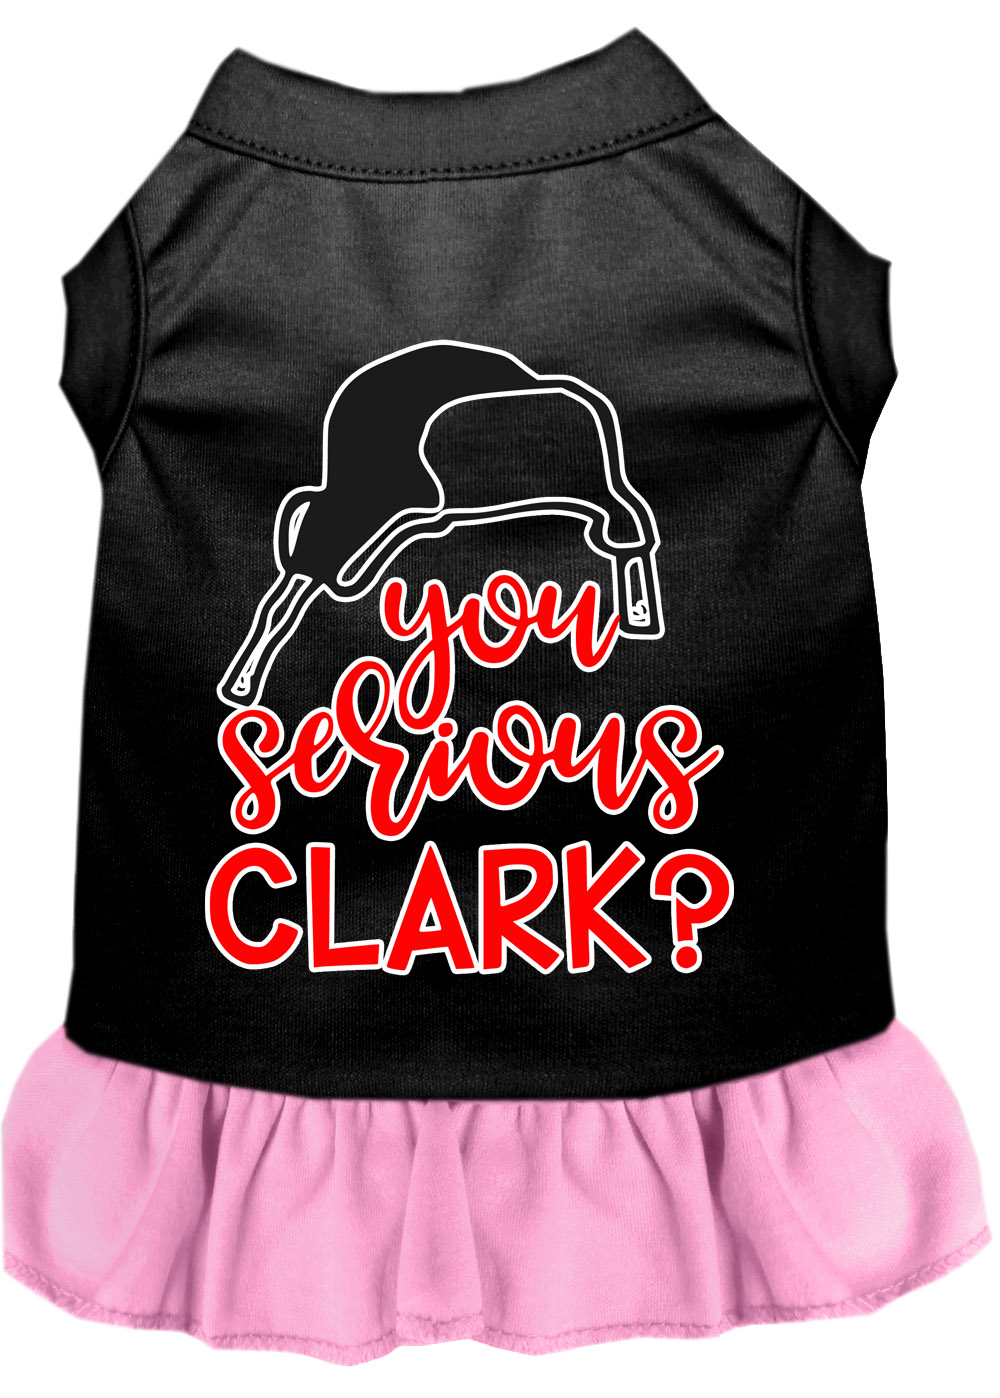 You Serious Clark? Screen Print Dog Dress Black with Light Pink XXXL